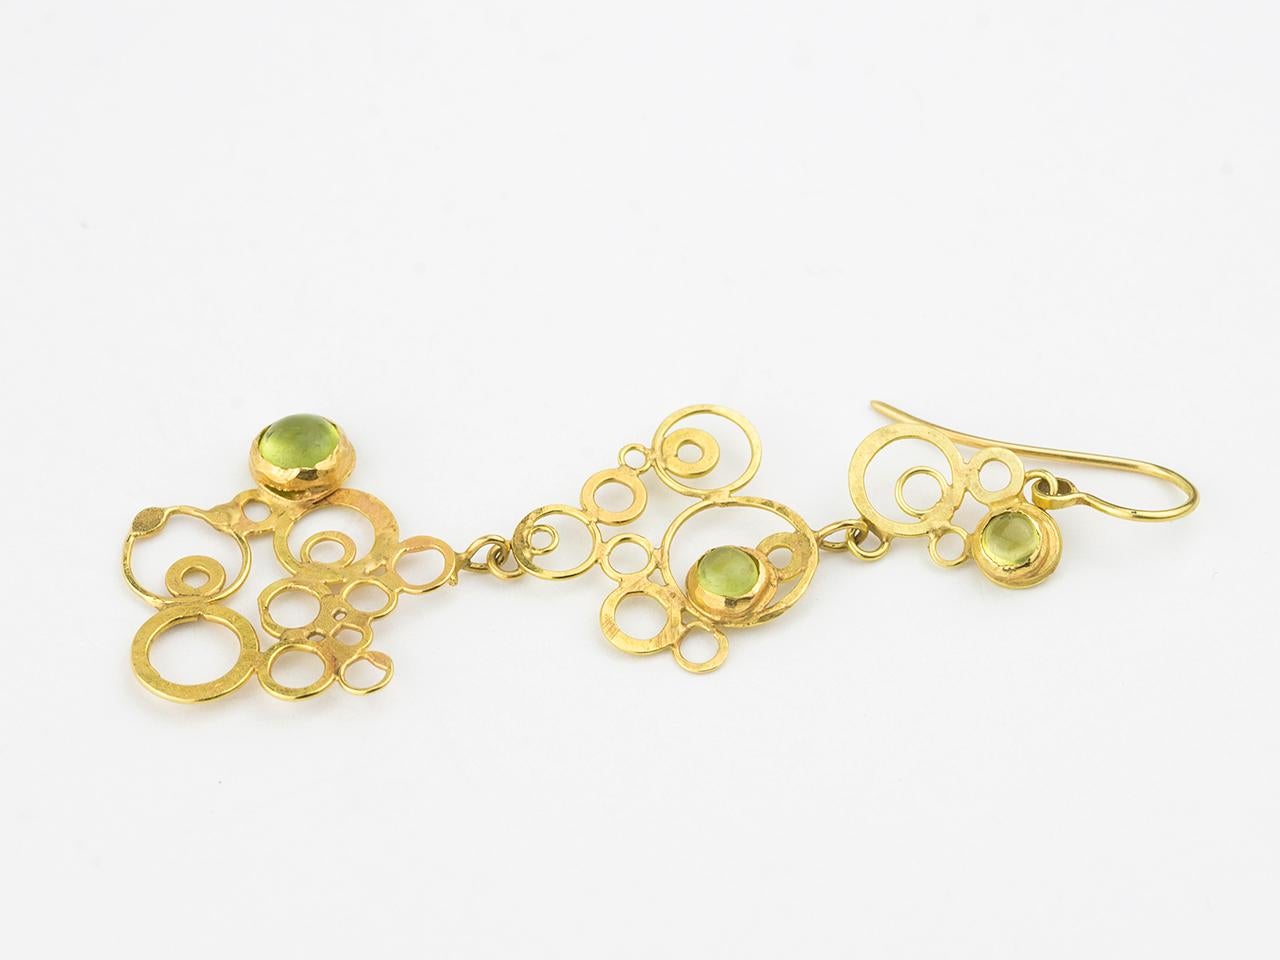 18k gold earpendants in a multi circle design with bezel set peridots.